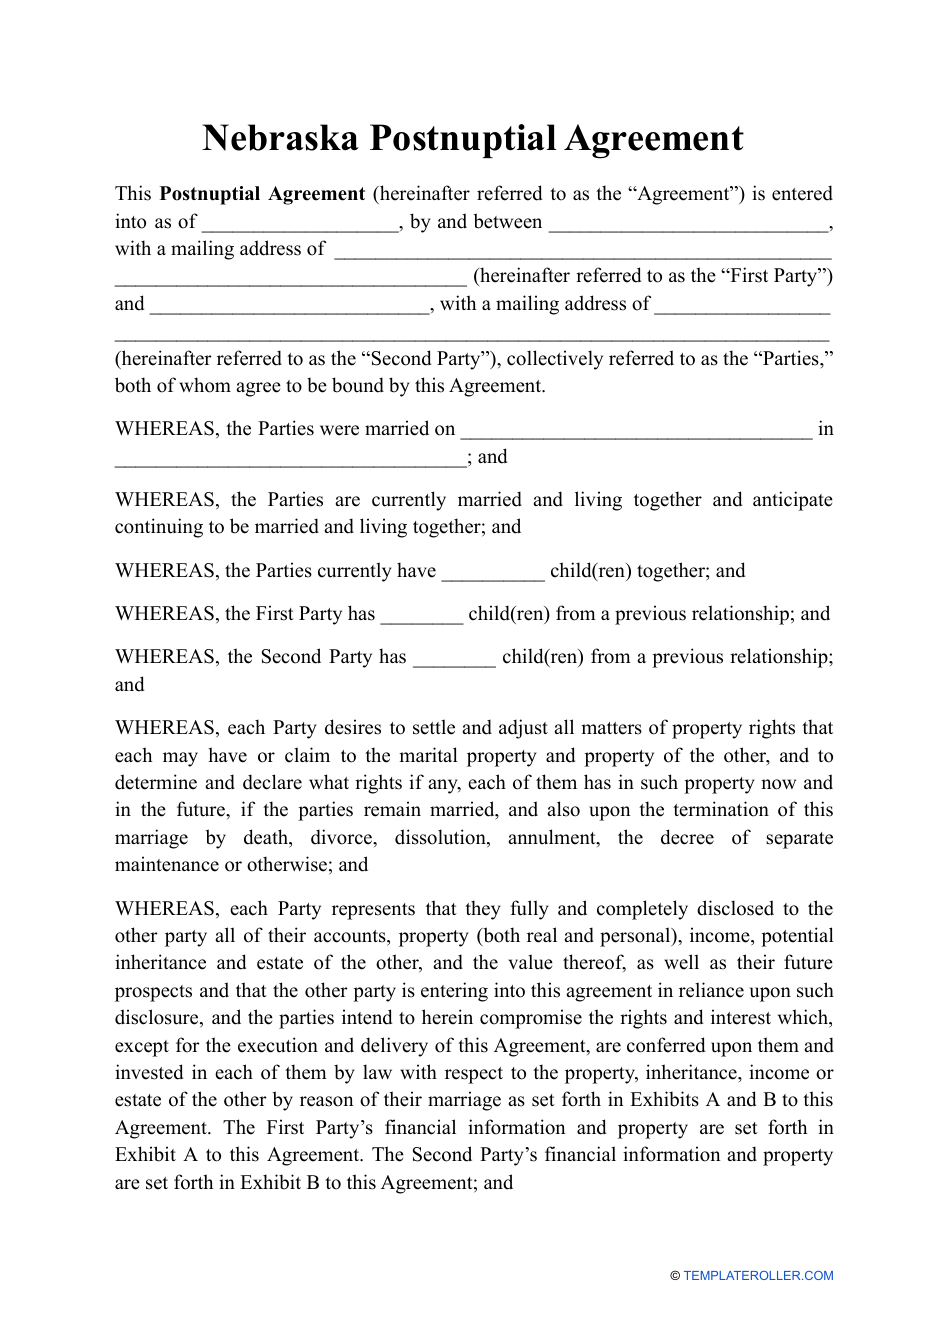 Postnuptial Agreement Template - Nebraska, Page 1